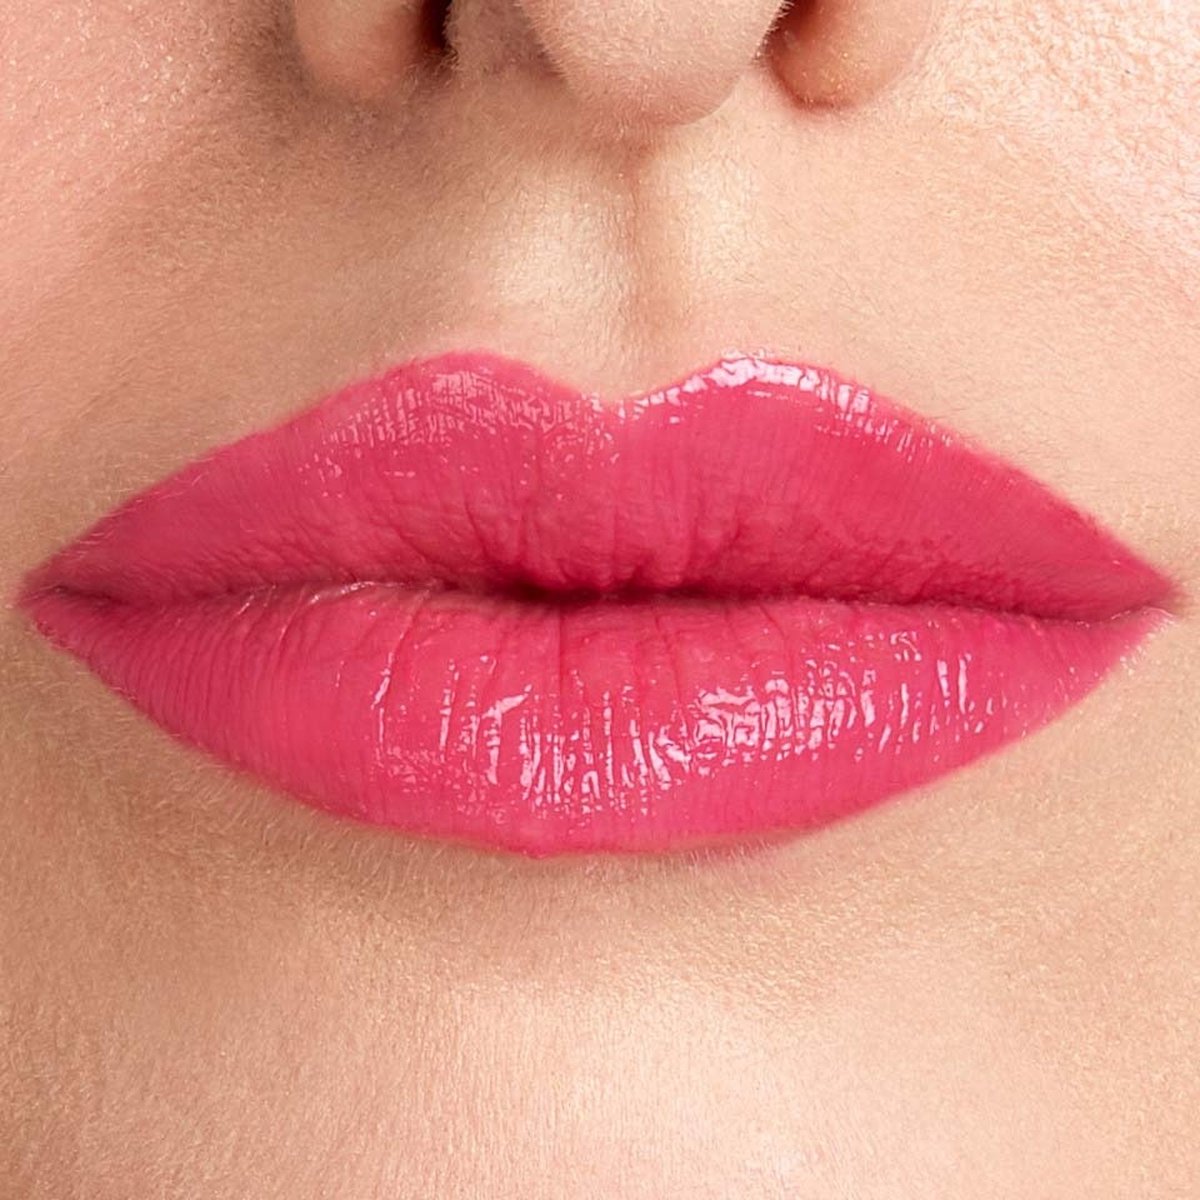 Dr. PAWPAW Tinted Hot Pink Lippenbalsem 25ml - Roze